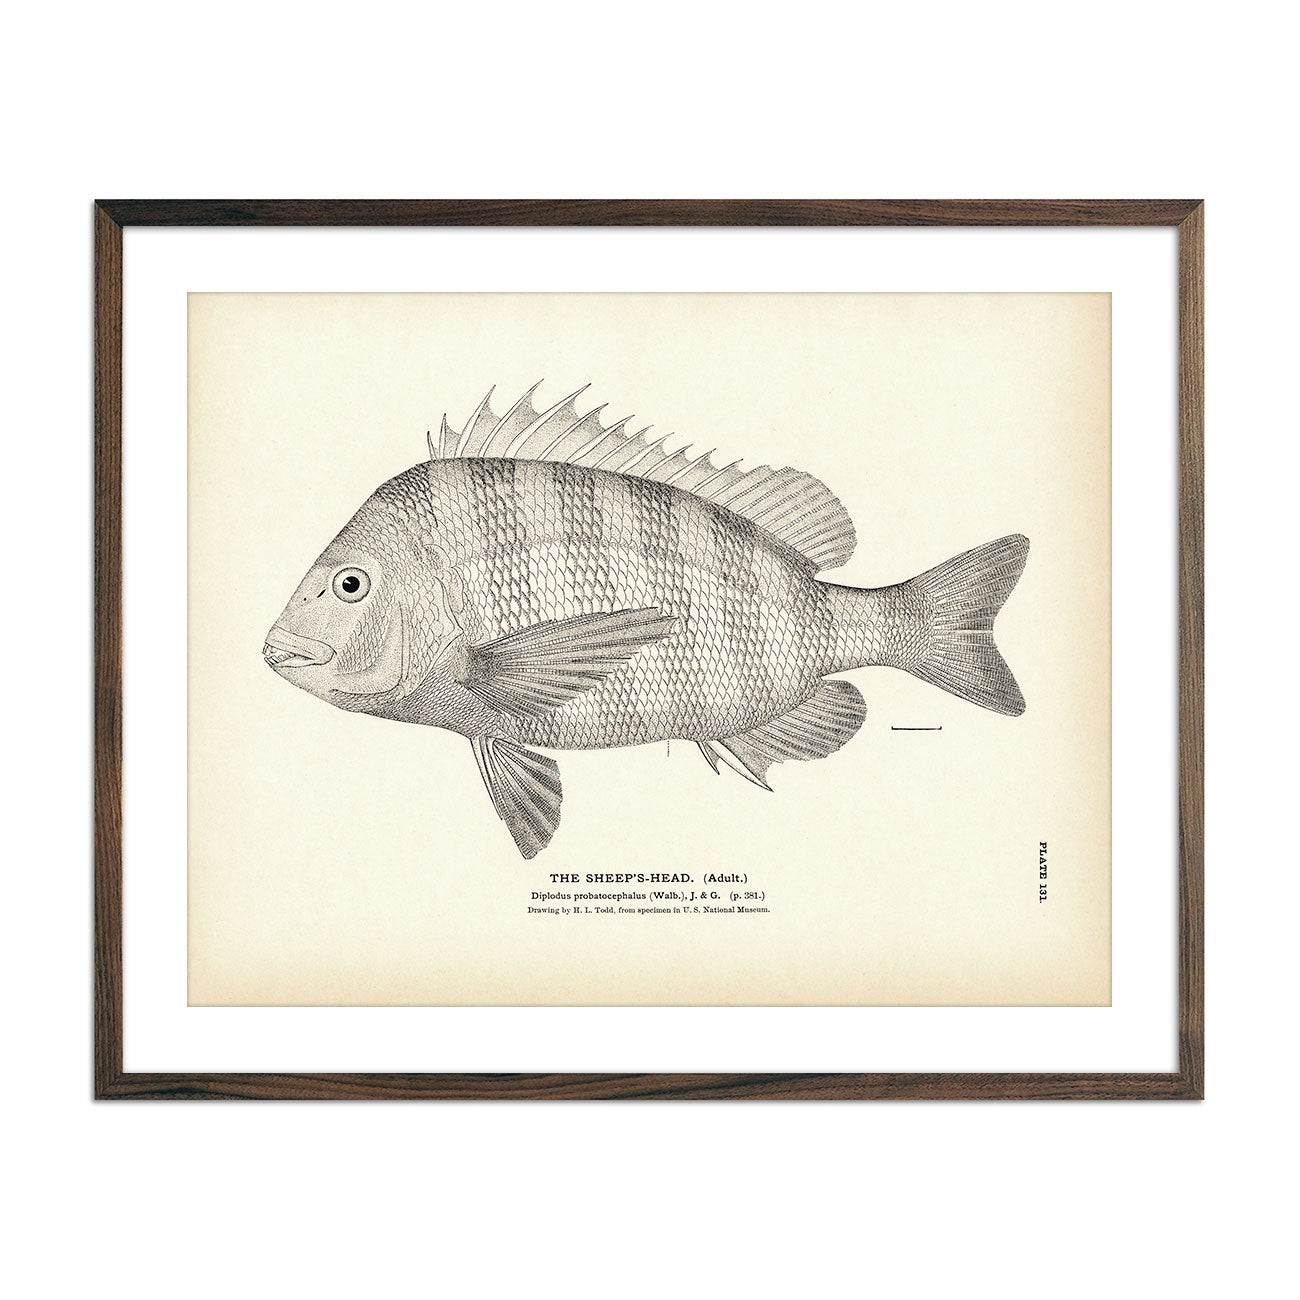 Vintage Sheep's-Head (Adult) fish print